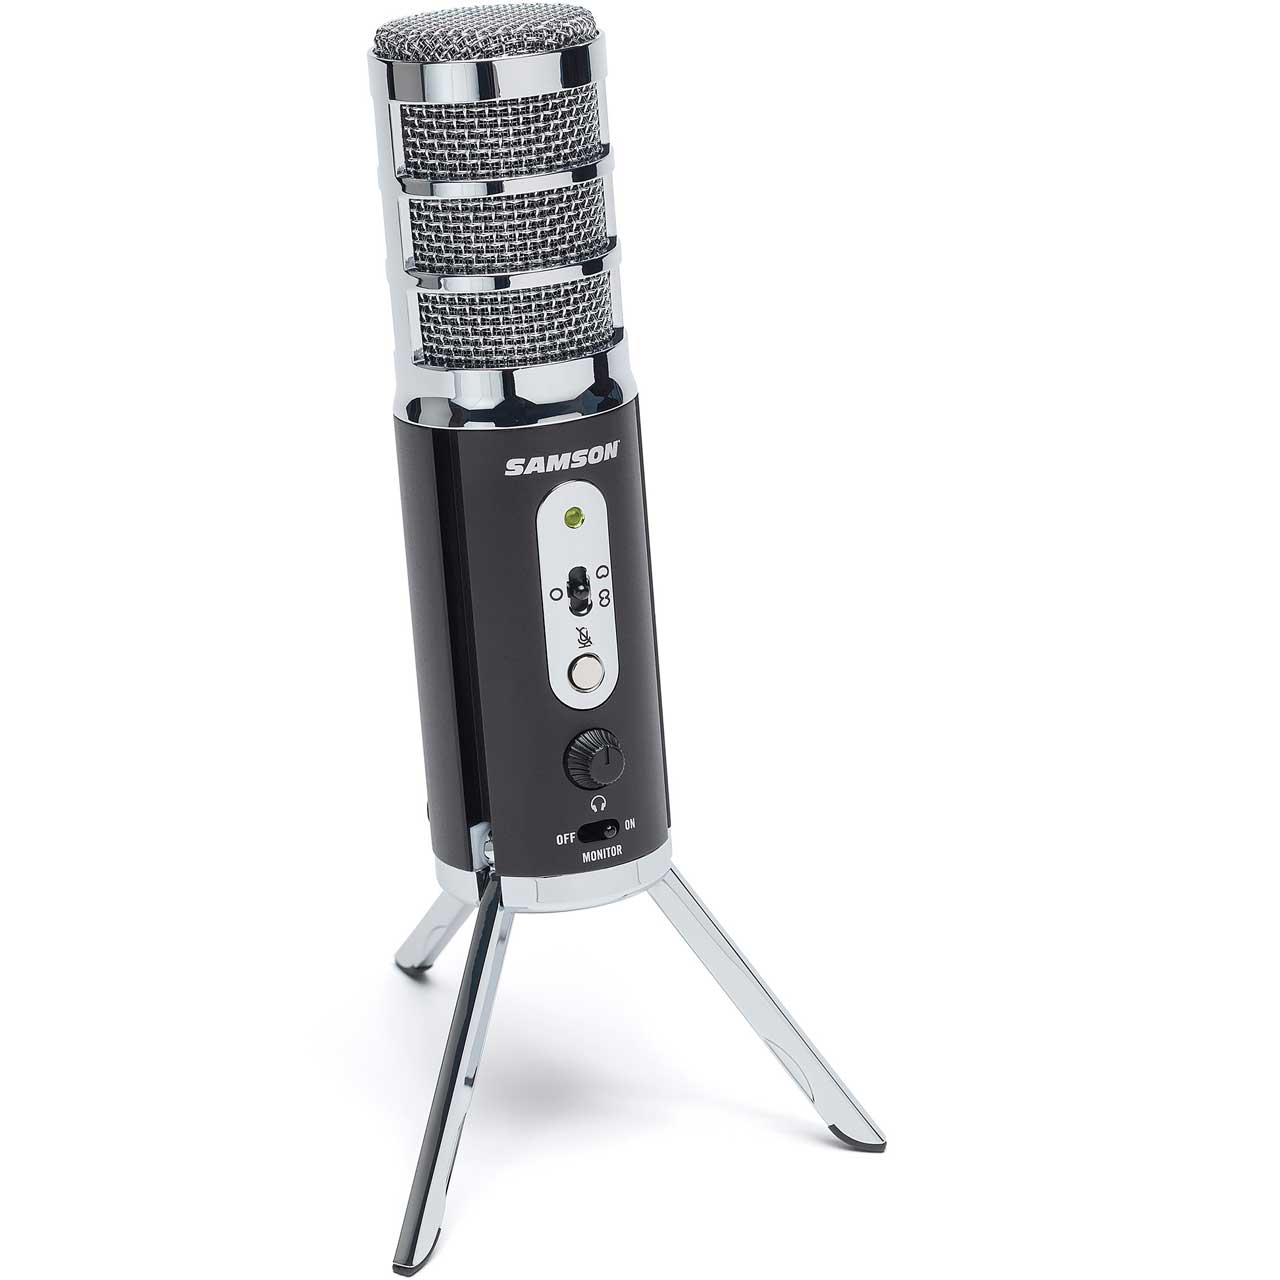  Samson Q2U Handheld Dynamic XLR/USB Microphone Bundle with Boom  Arm, Shock Mount, and Pop Filter (4 Items) : Musical Instruments